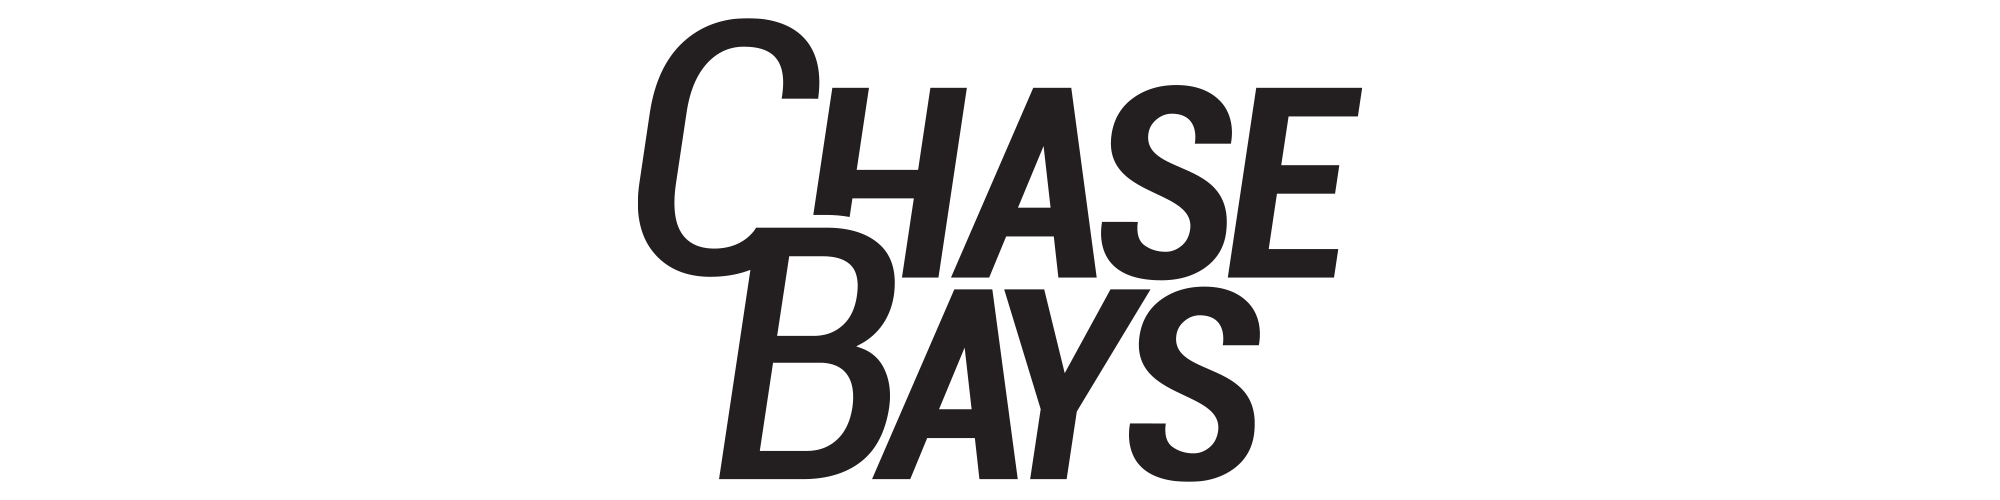 Chase Bays